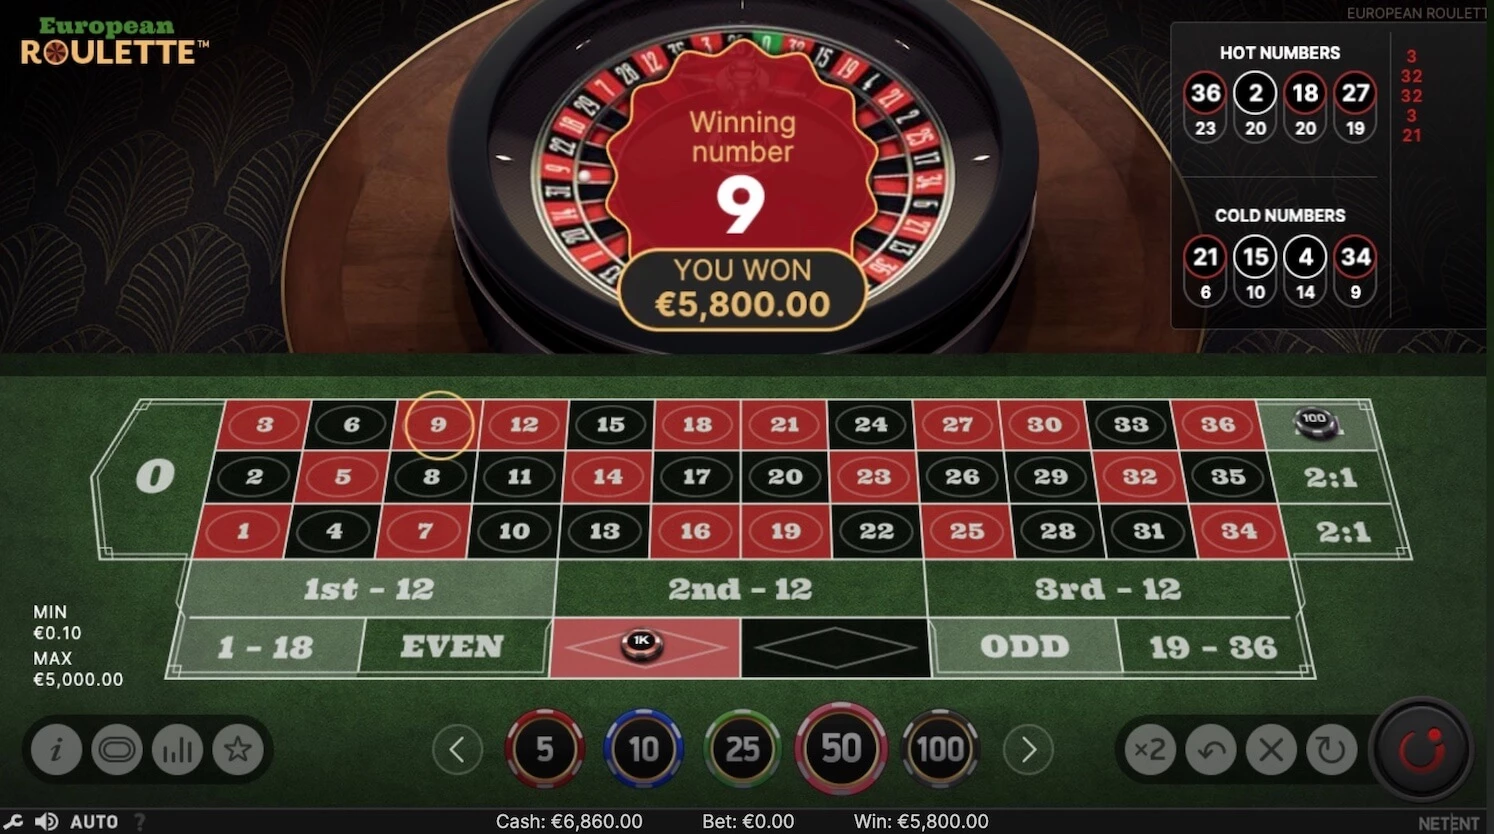 European roulette online win 9 red